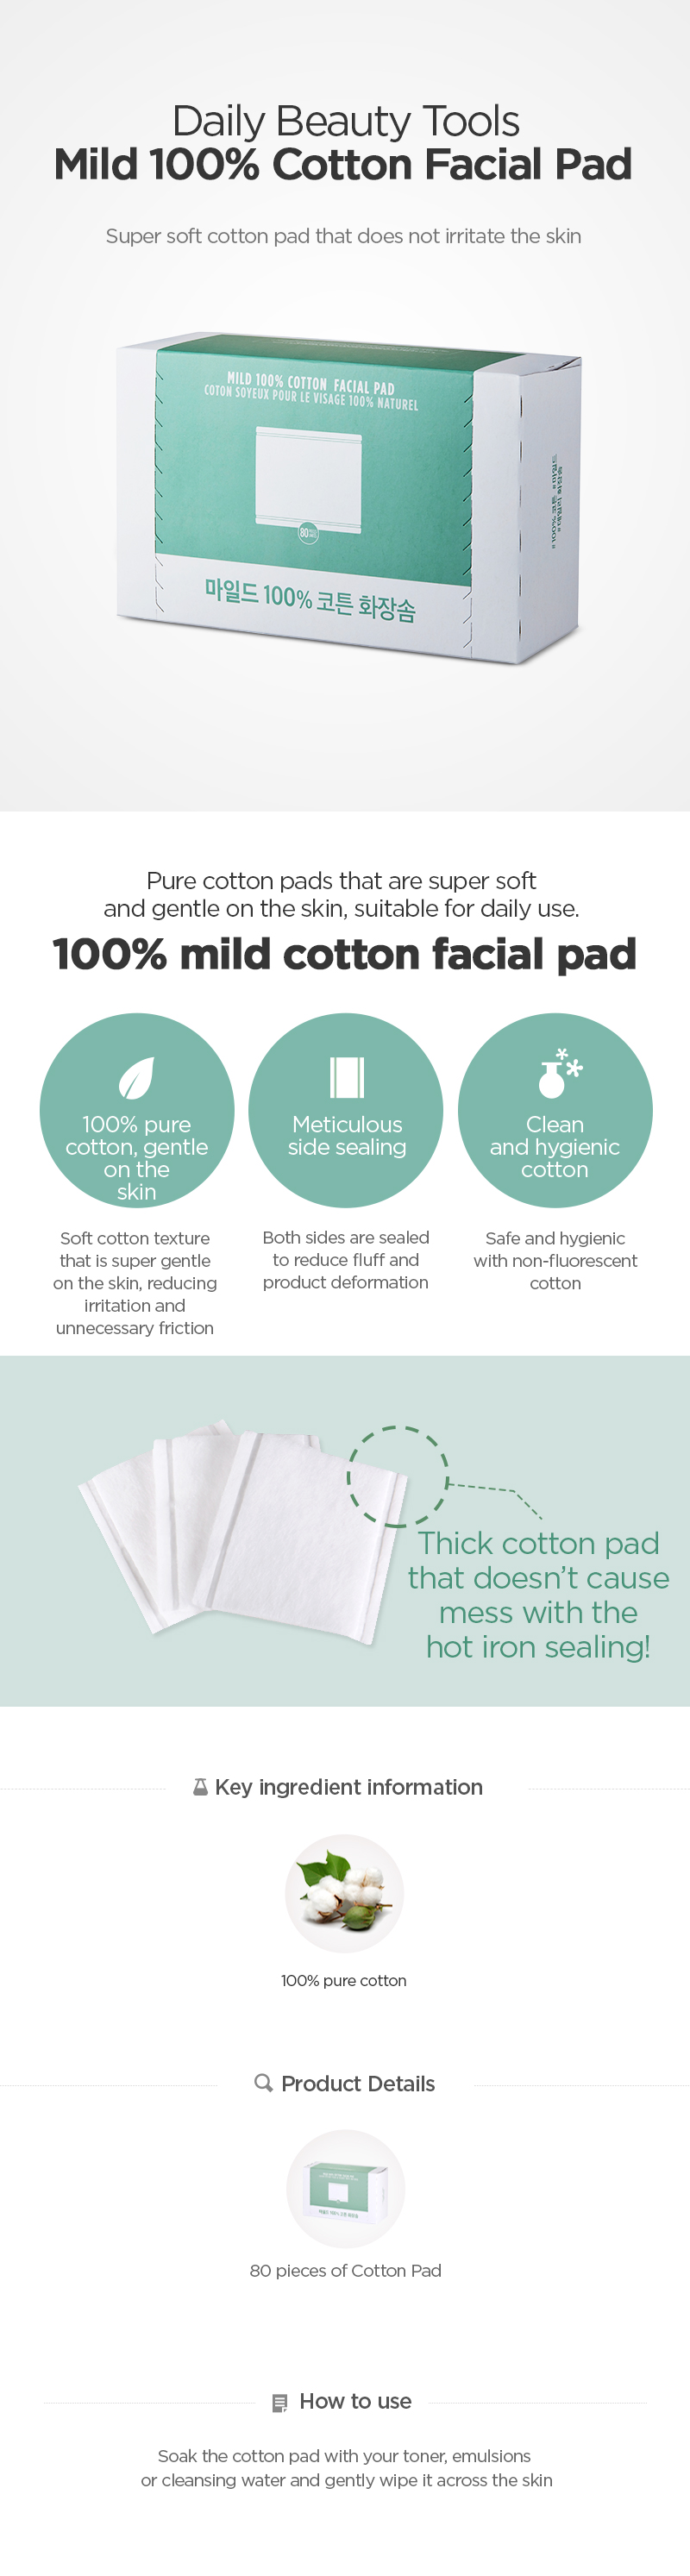 Mild 100% Cotton Facial Pad